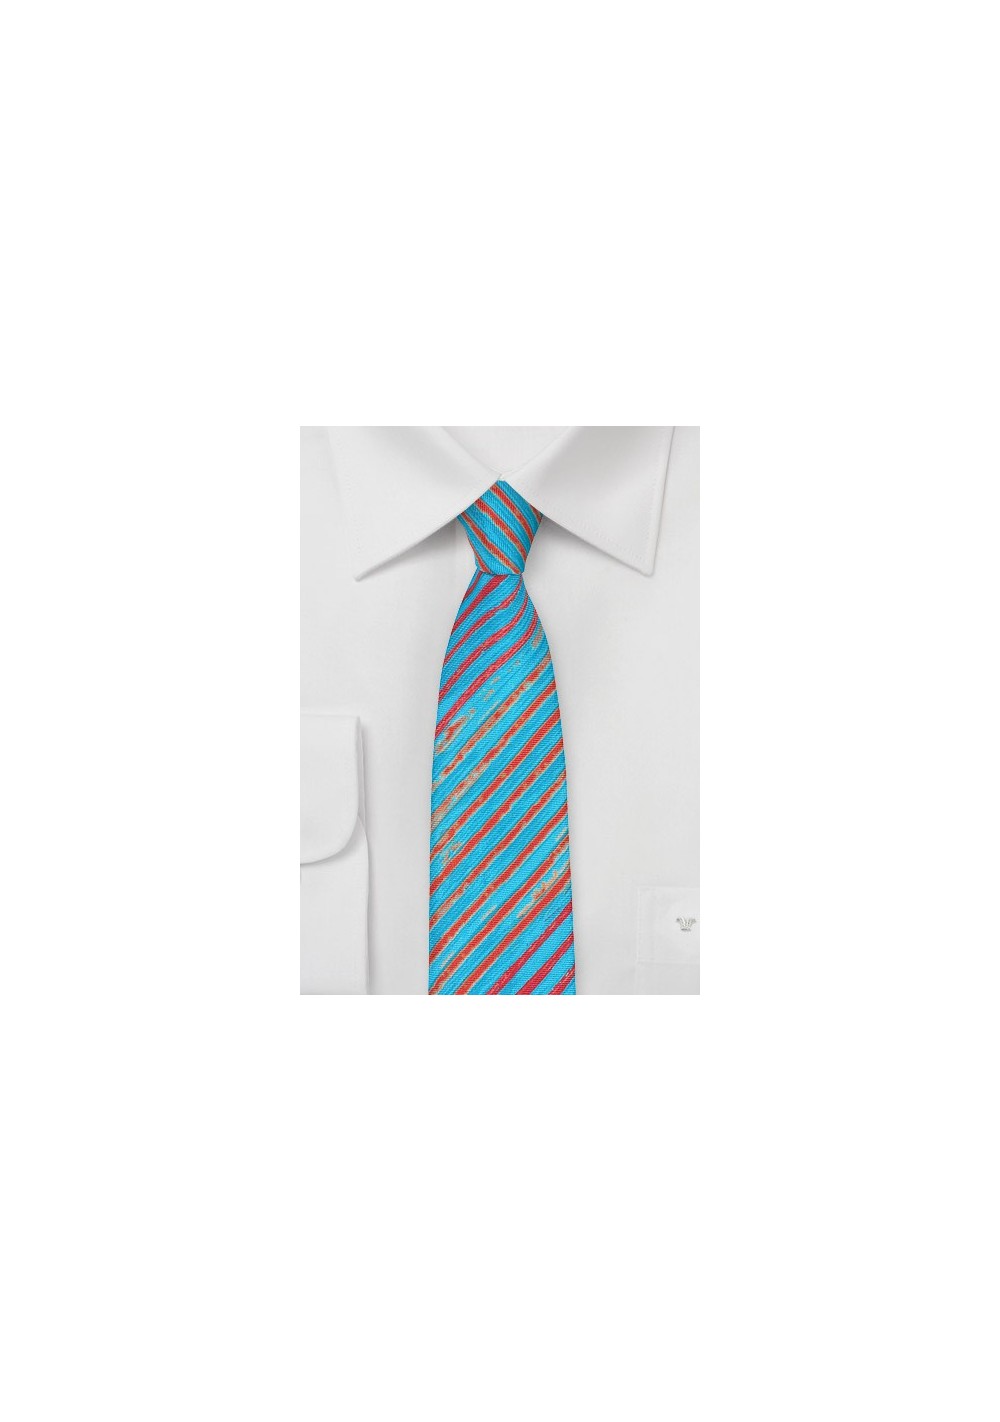 Tie Dye Striped Tie in Aqua and Orange